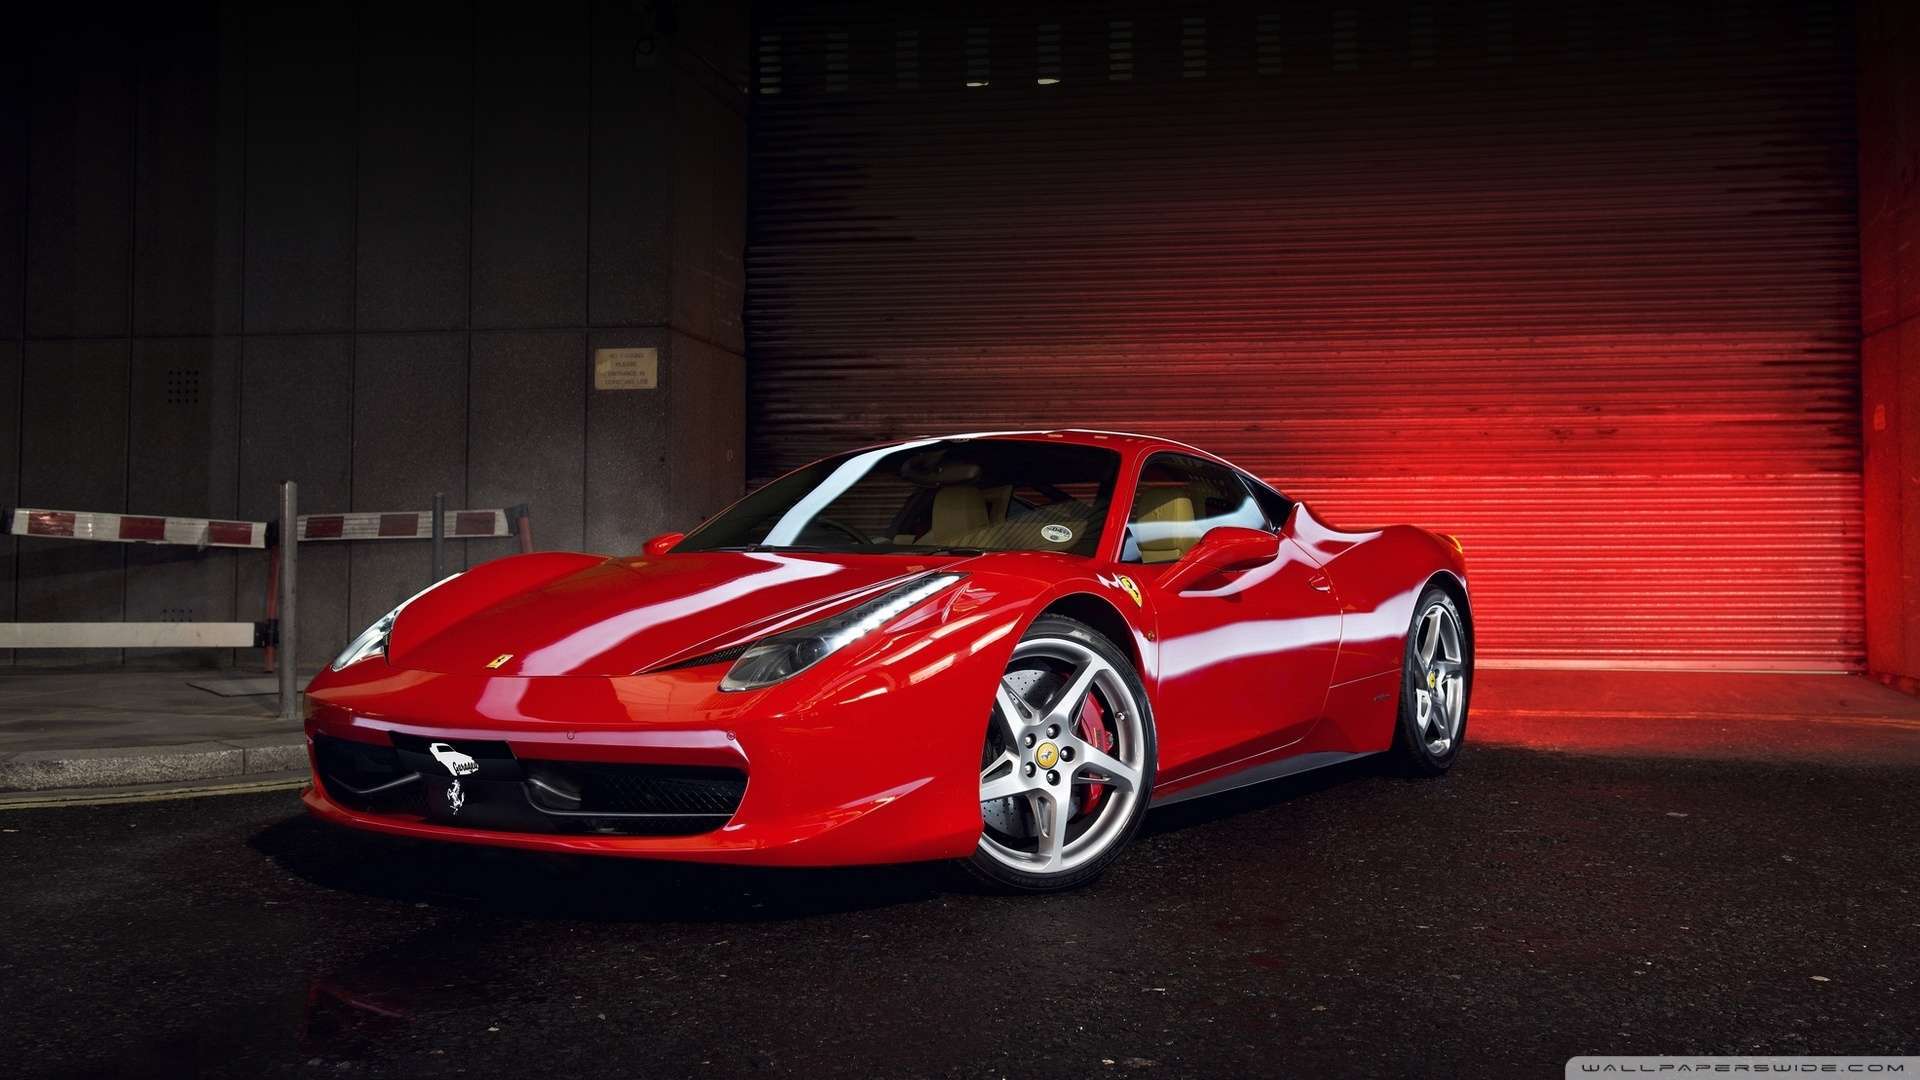 Ferrari Wallpaper Hd 1080p - image